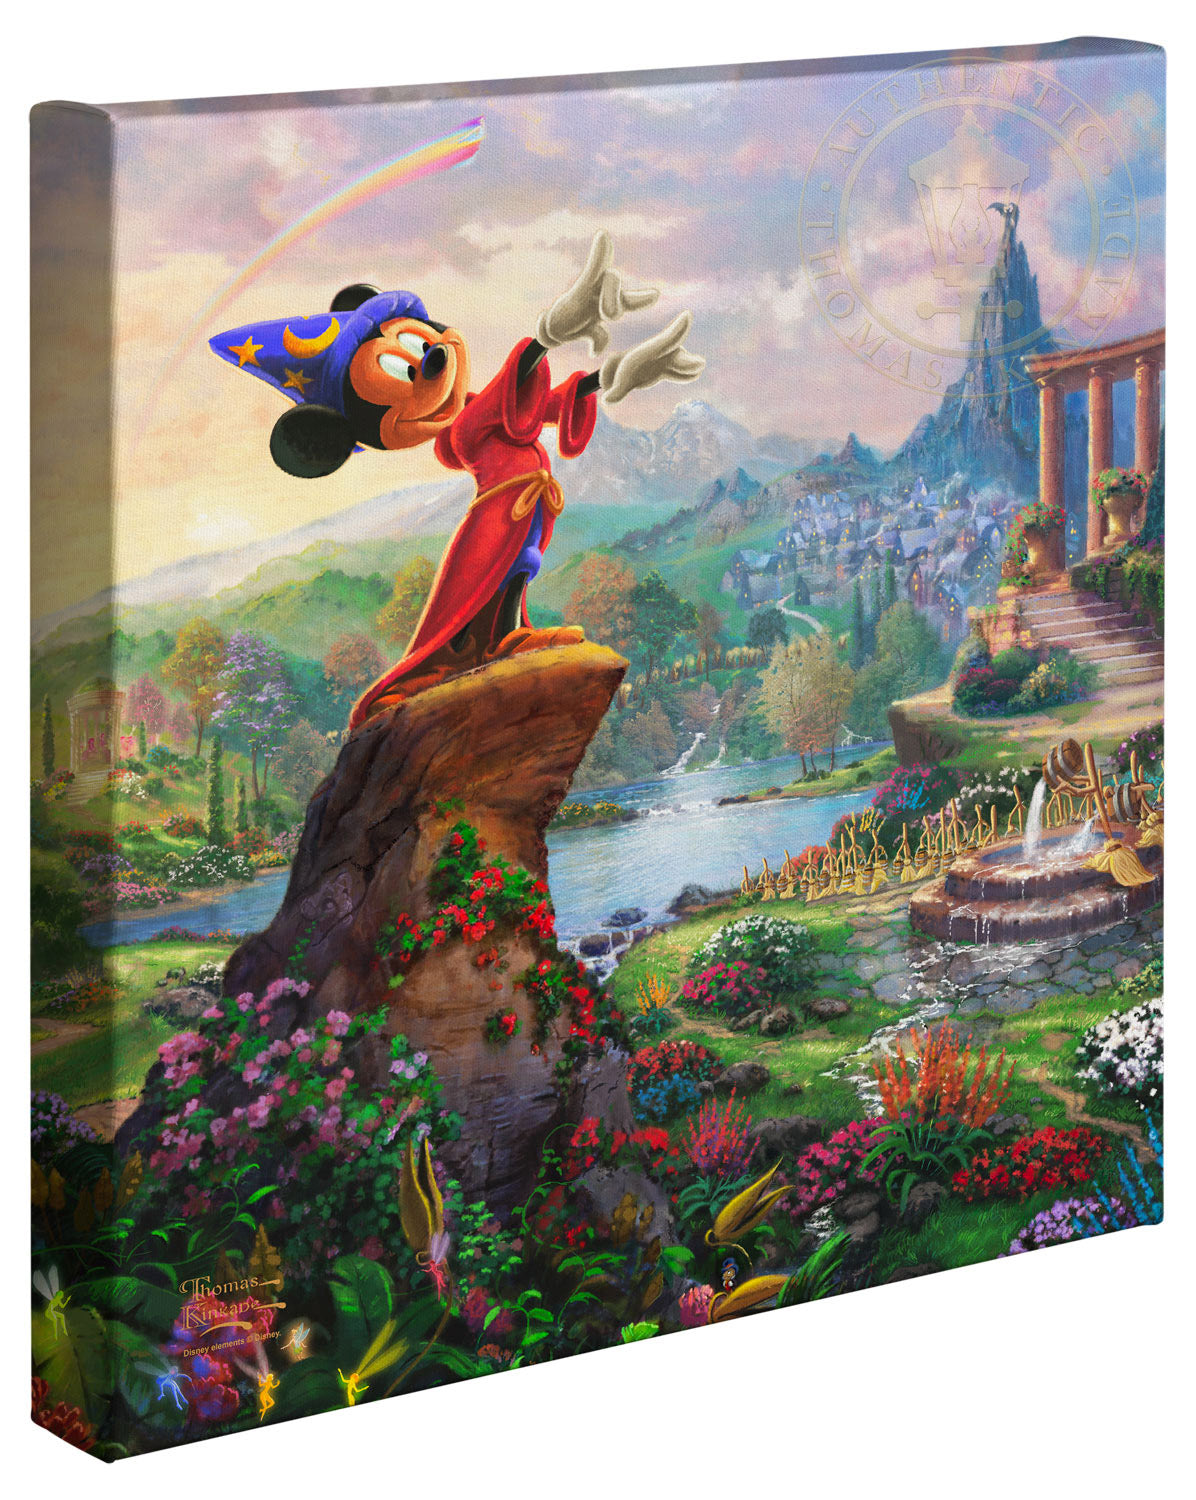 Thomas Kinkade Disney Dreams "Fantasia" Limited and Open Canvas Giclee